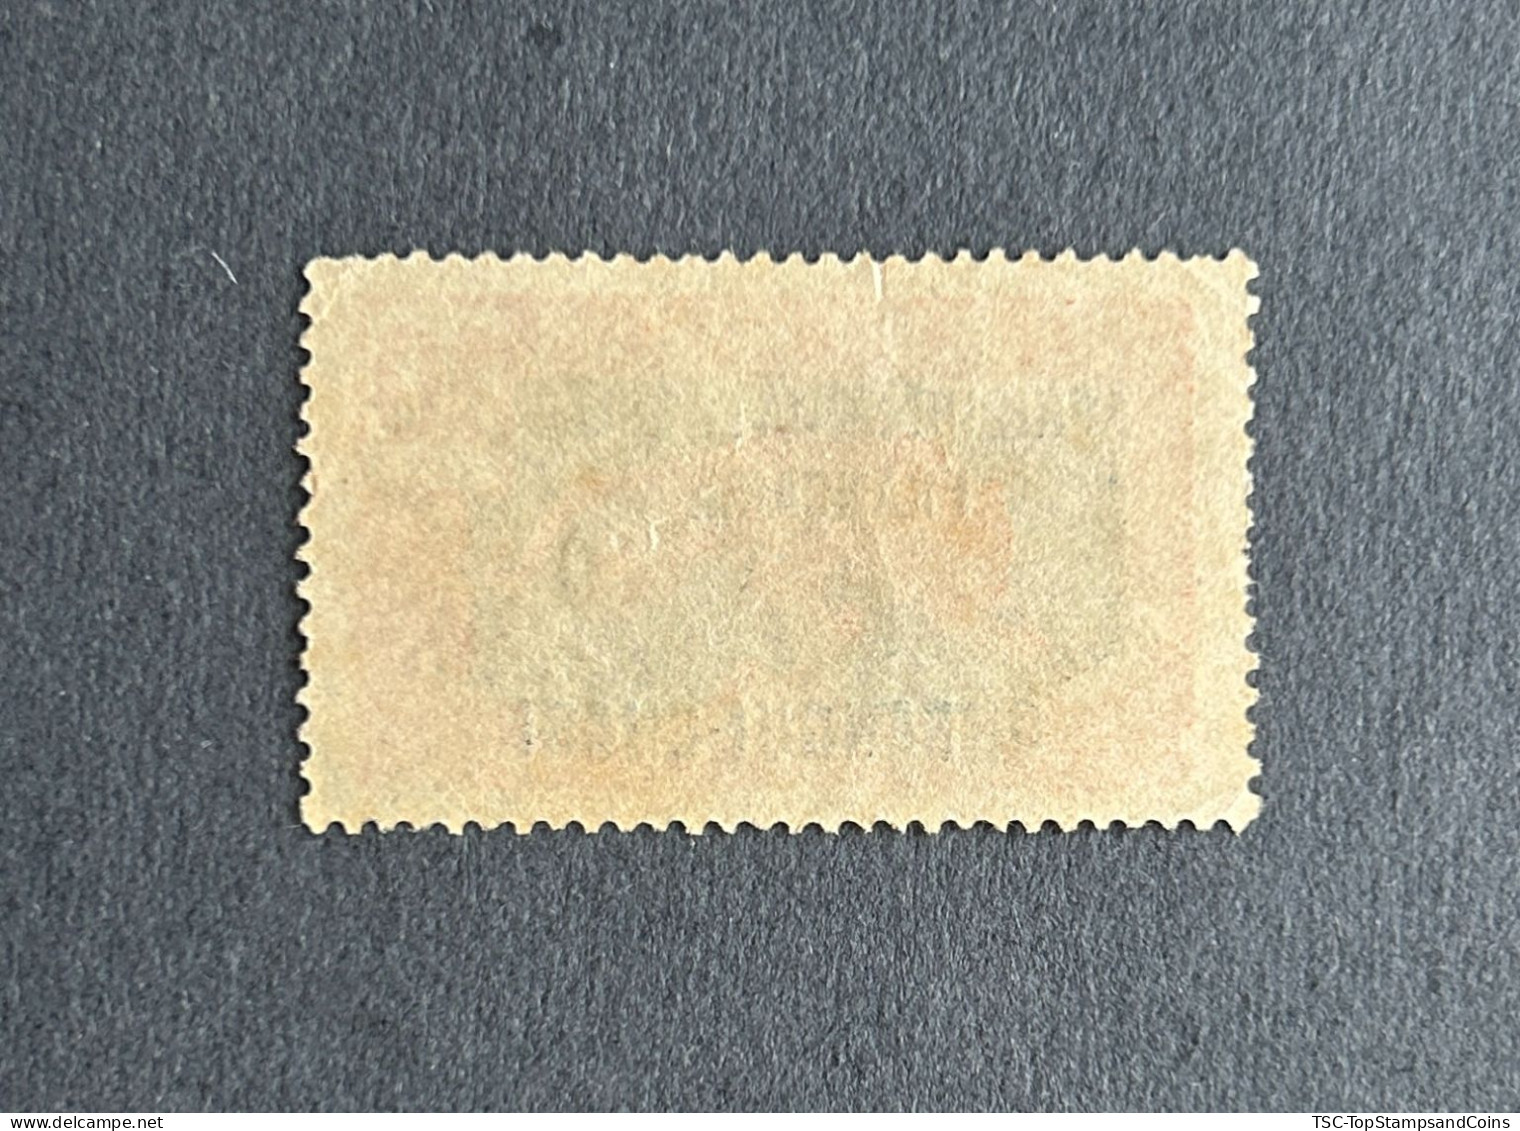 FRAOUB063U - Leopard - Overprinted AEF - Oubangui-Chari - 10 C Used Stamp - Oubangui-Chari - 1925 - Gebraucht